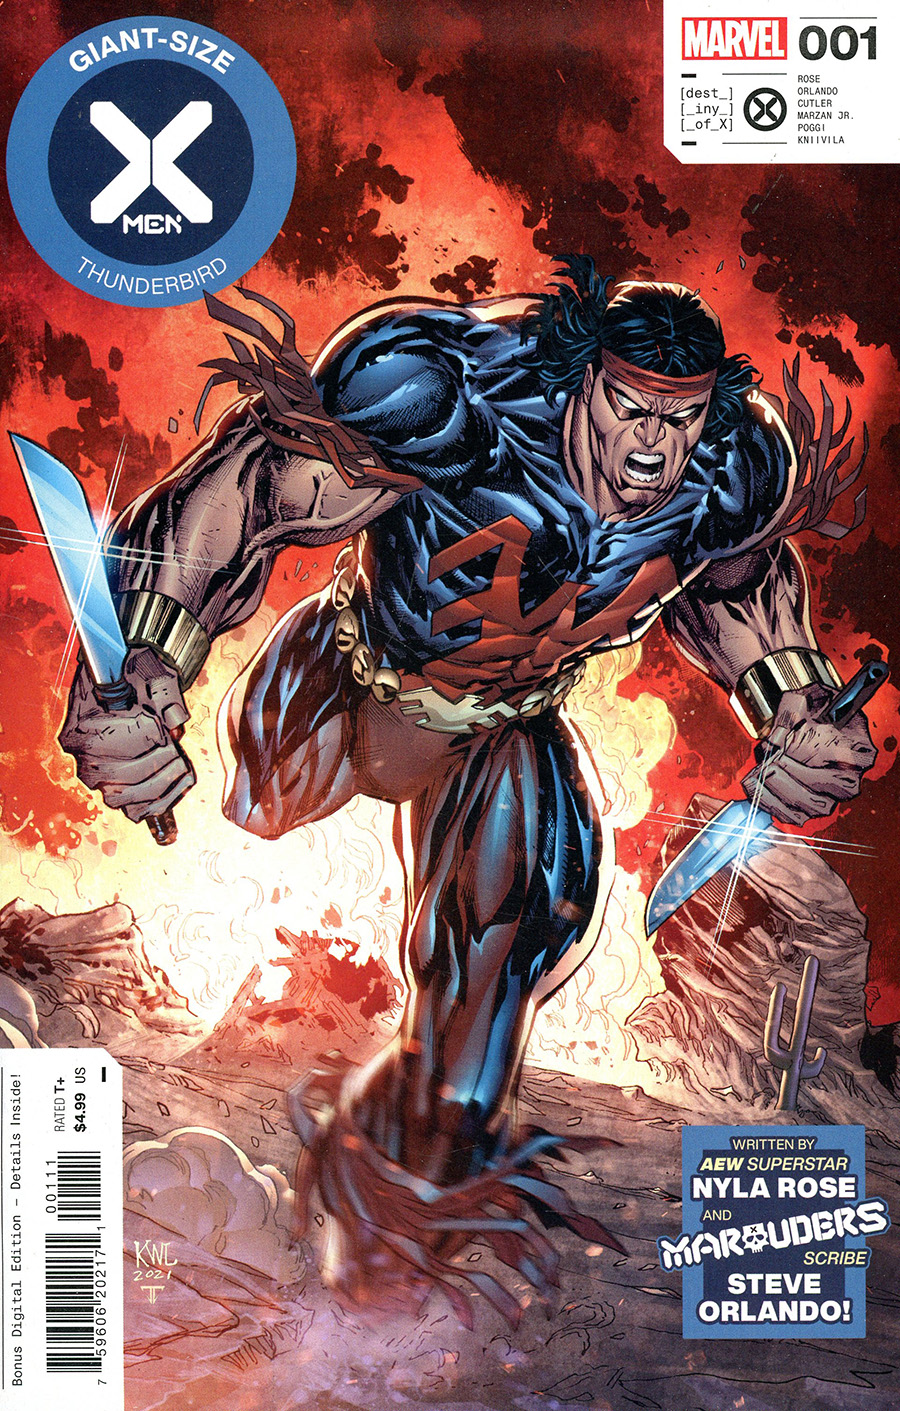 Giant-Size X-Men Thunderbird #1 (One Shot) Cover A Regular Ken Lashley Cover